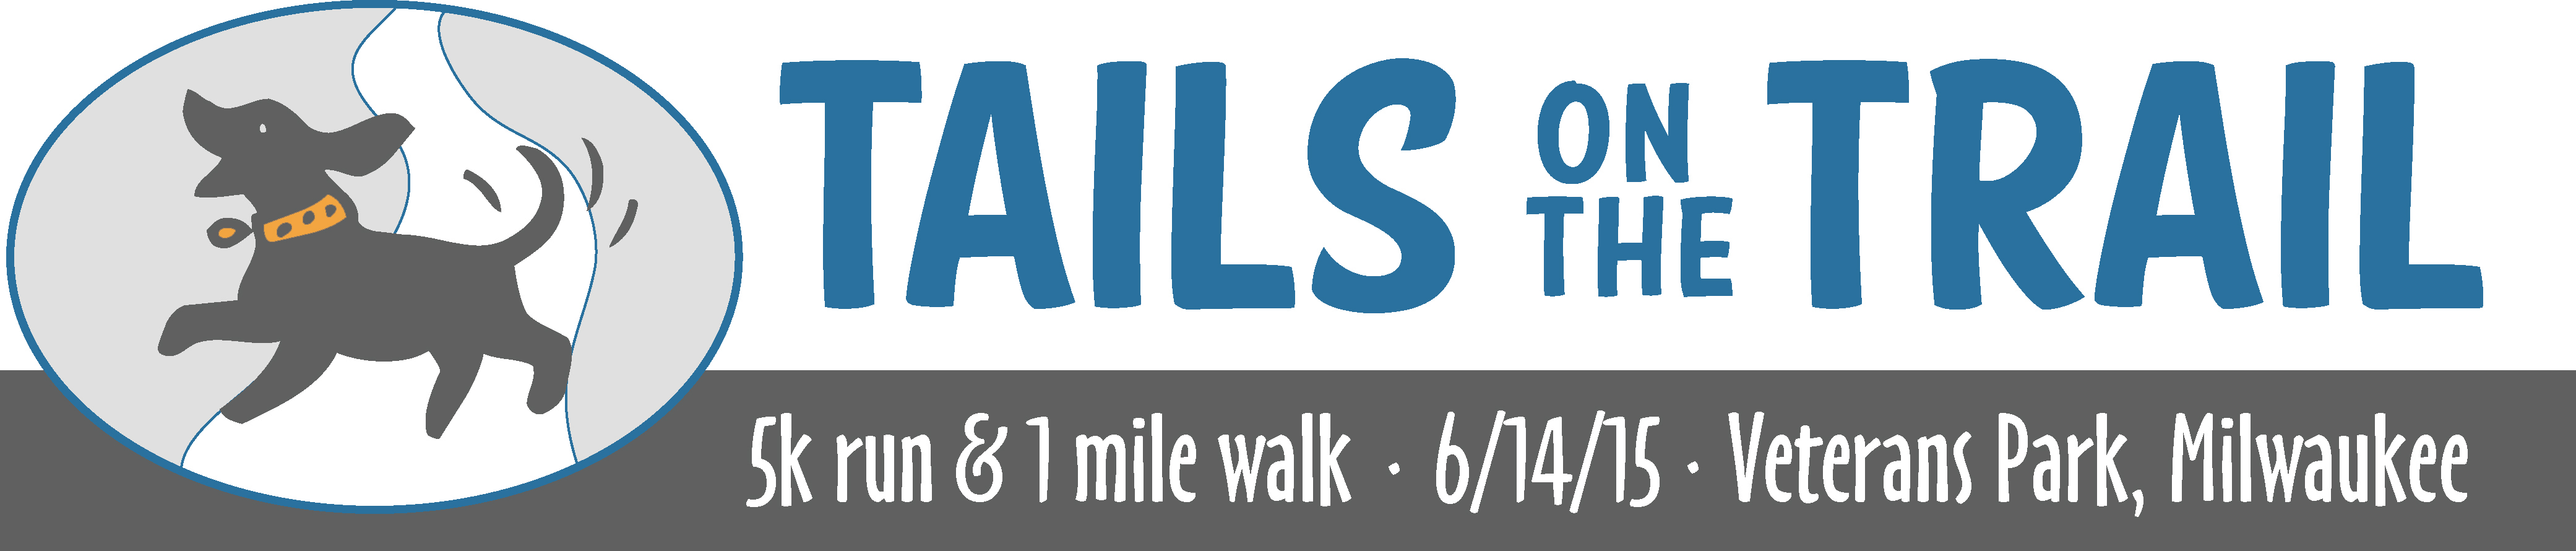 2015 Tails on the Trail Logo- orange collar